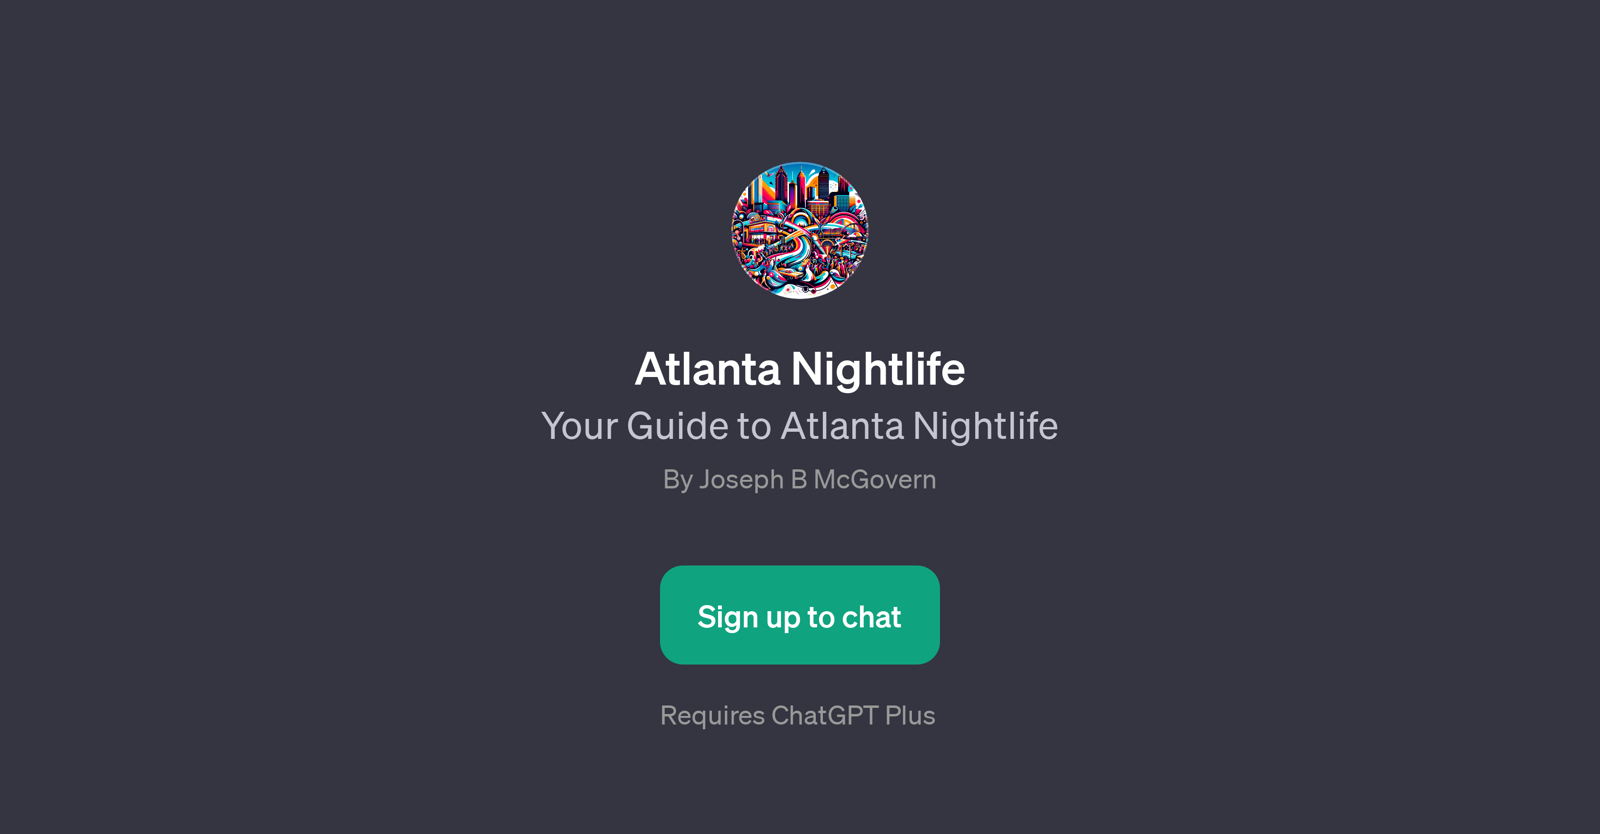 Atlanta Nightlife website